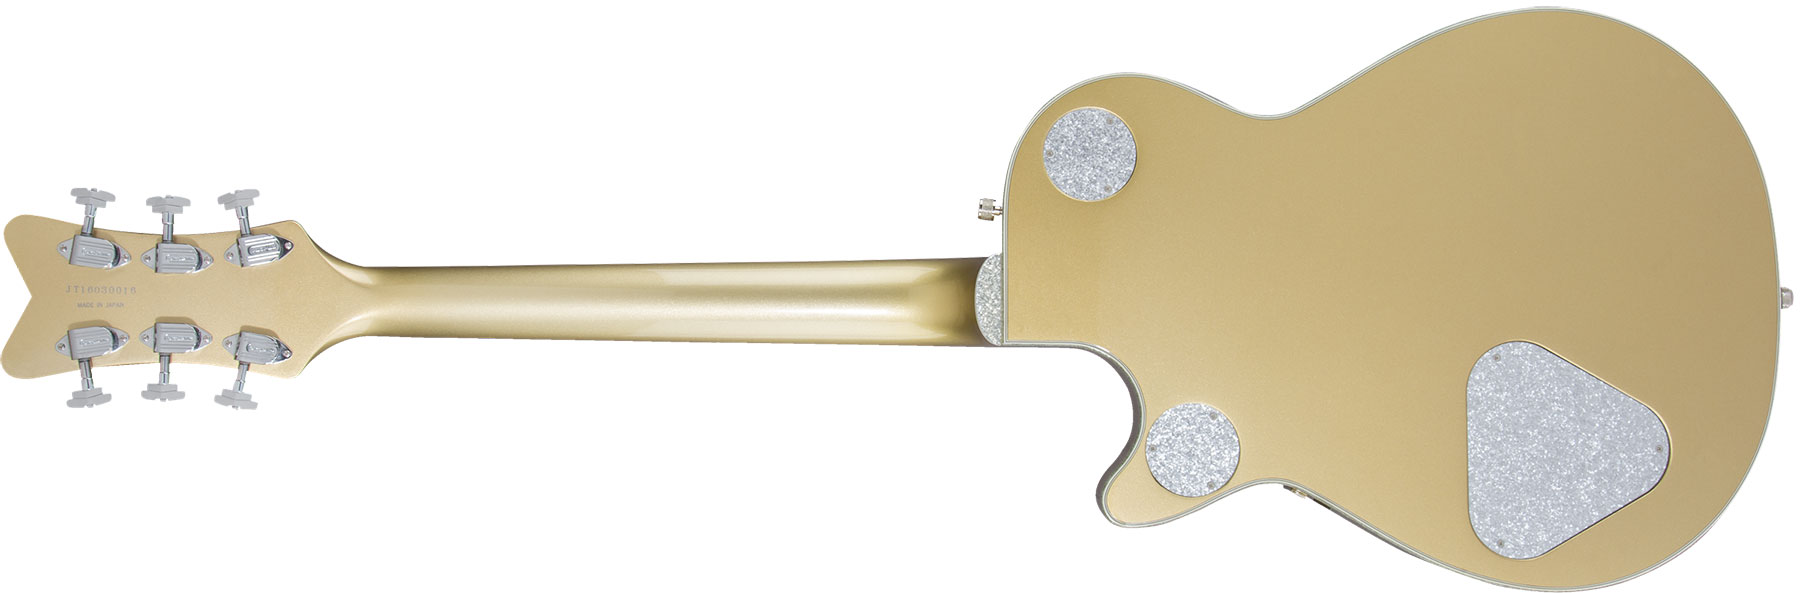 Gretsch G6134t Penguin Ltd Professional Japon Hh Trem Bigsby Eb - Casino Gold - Single cut electric guitar - Variation 1